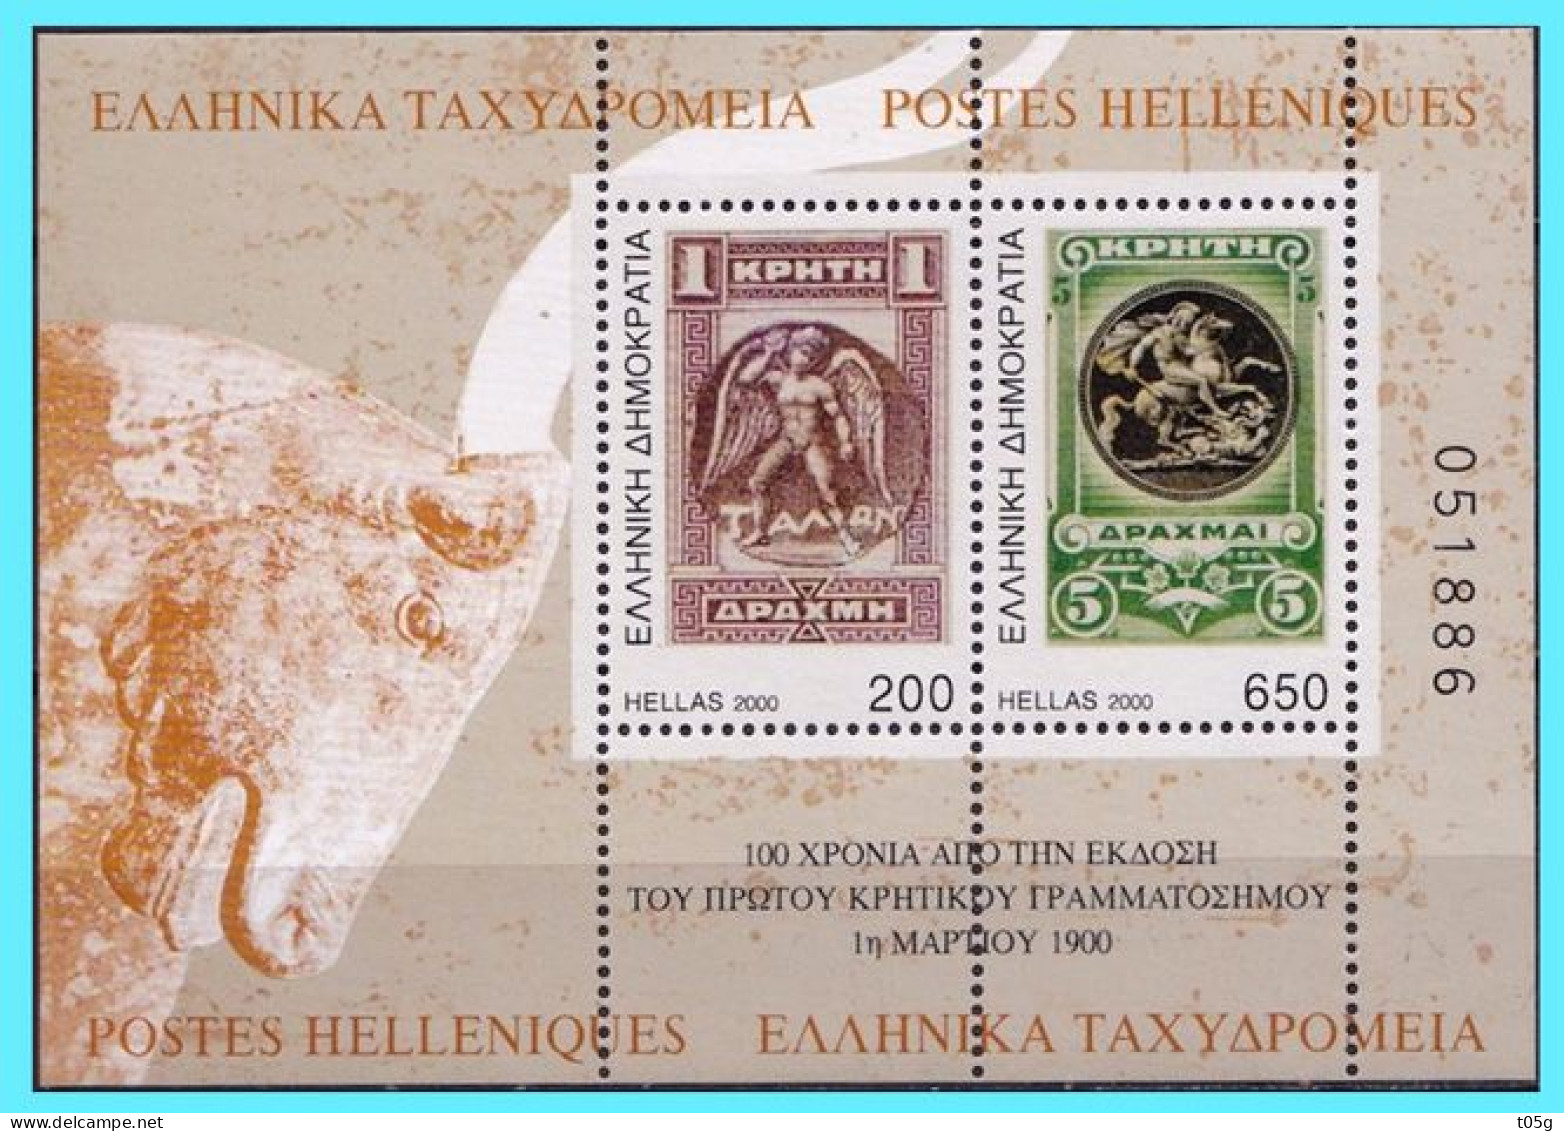 GREECE- GRECE- HELLAS 2000:  The Stamps Of Crete Miniature Sheet MNH** - Ongebruikt